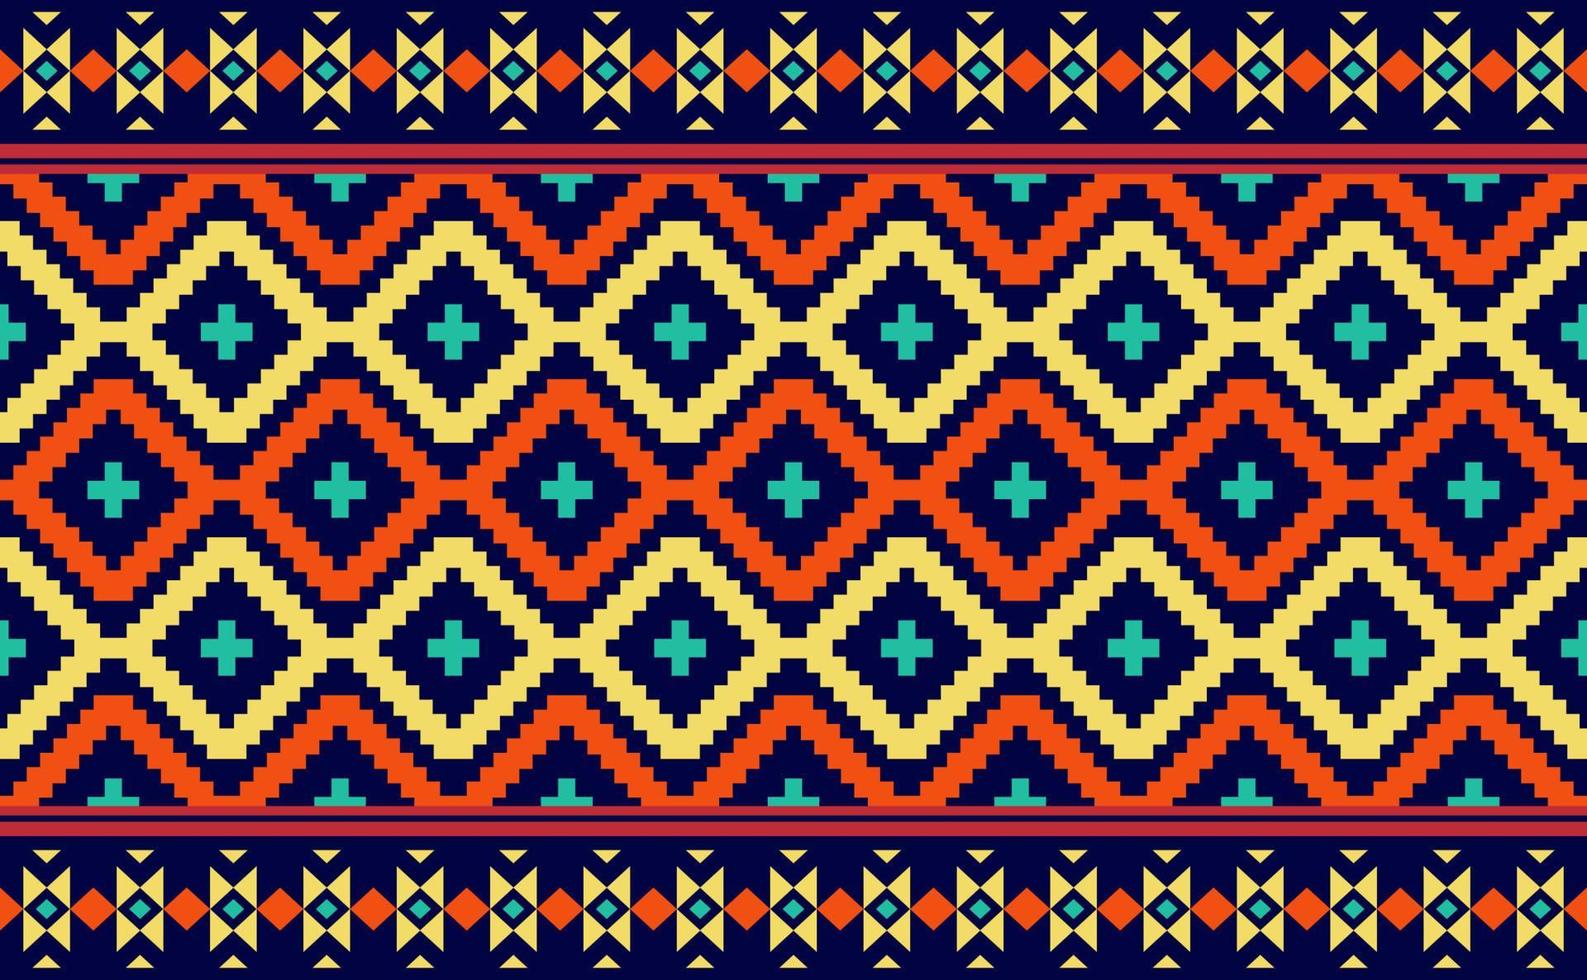 padrão étnico geométrico, fundo tribal contínuo bordado, arte vintage de tecido gráfico vetorial vetor